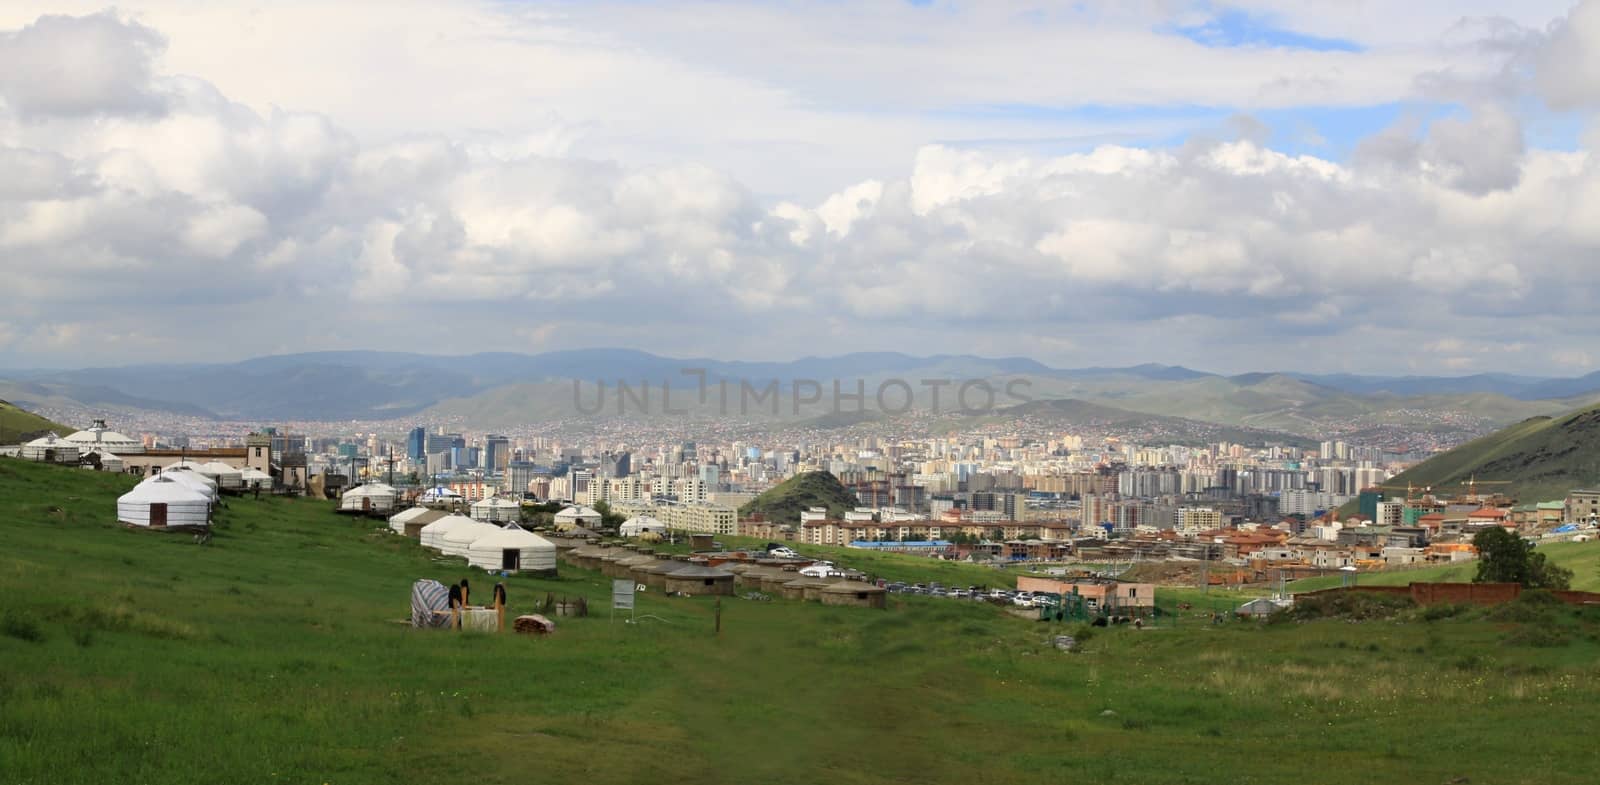 View on the Ullaanbaator in Mongolia by jnerad